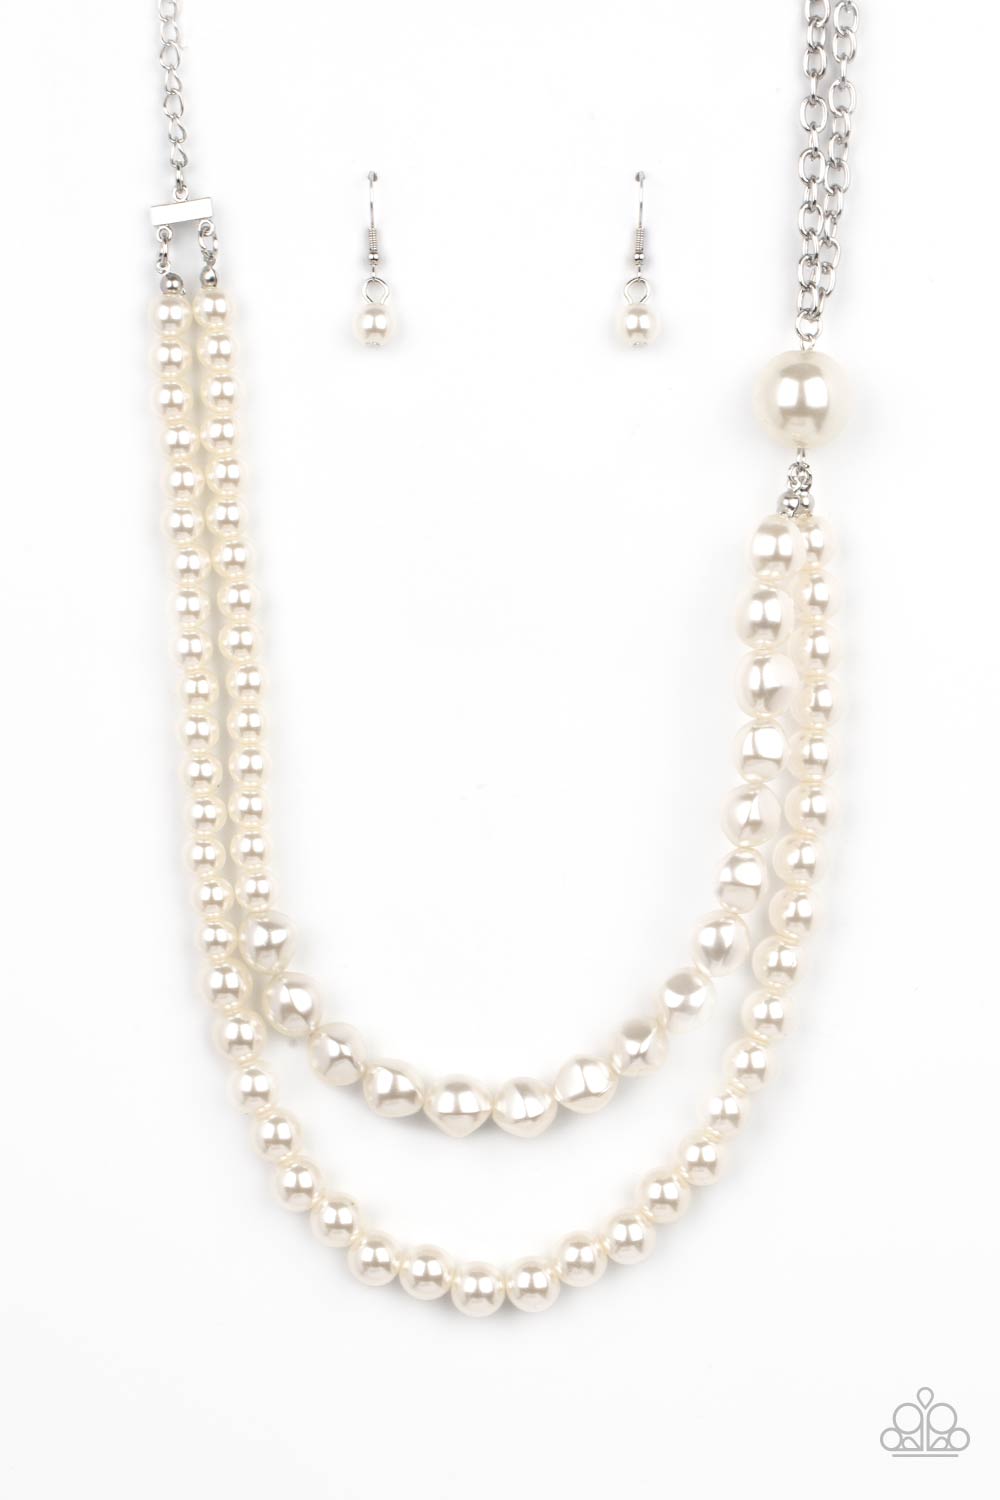 Remarkable Radiance - White Necklace Set - Princess Glam Shop